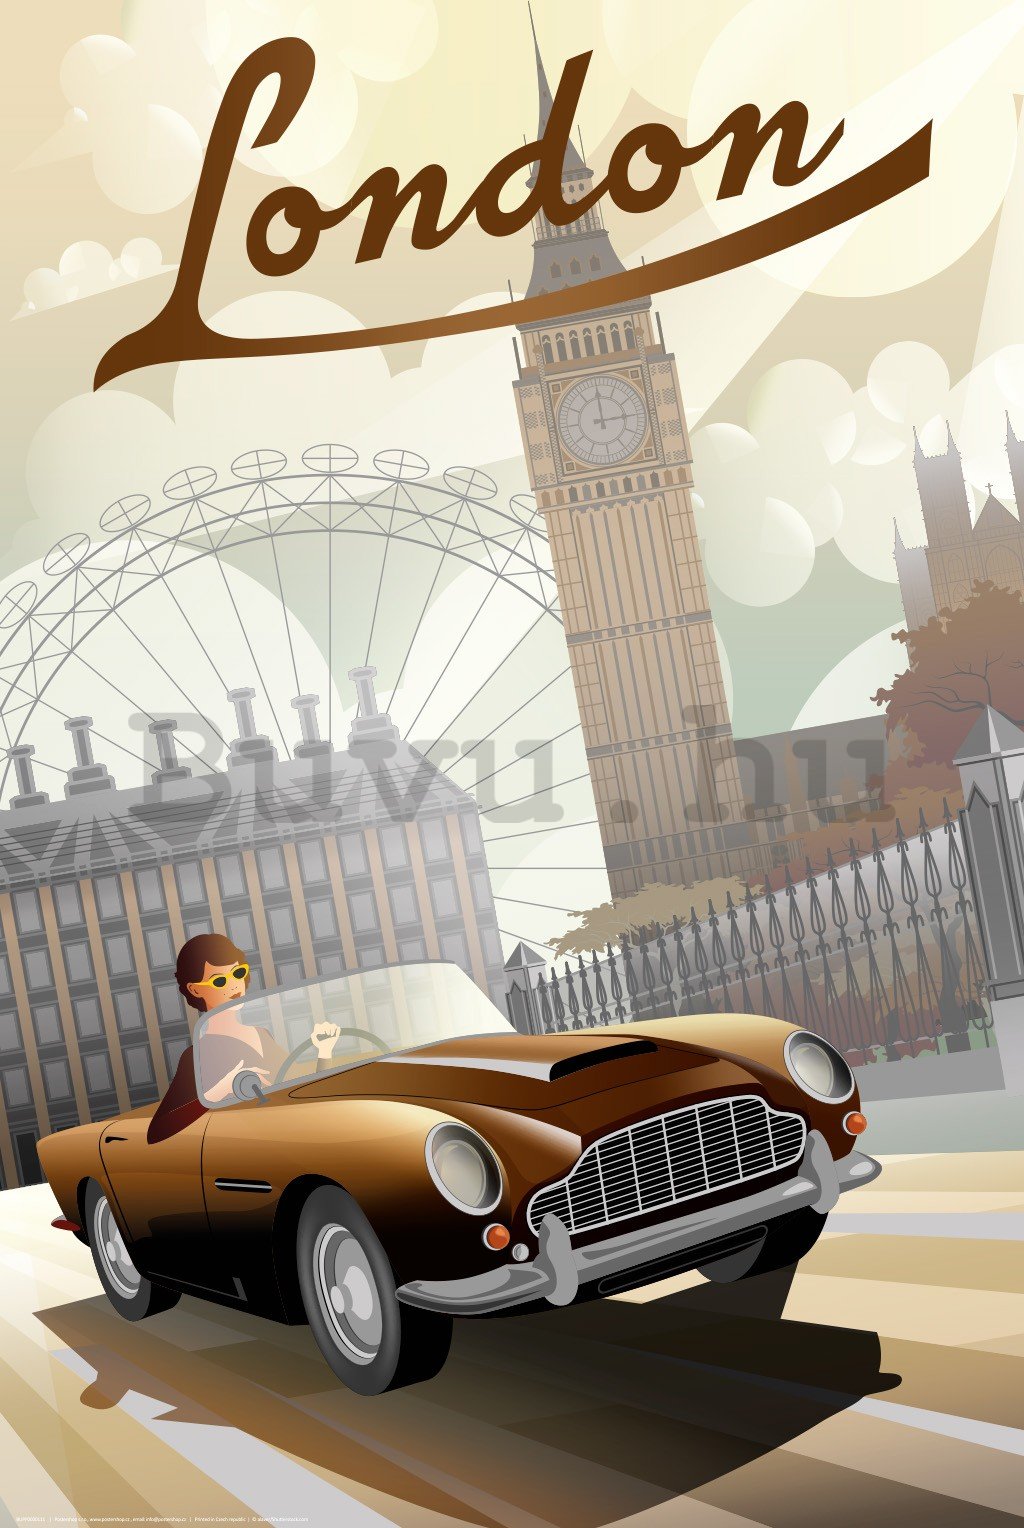 Poster: London (Art Deco)